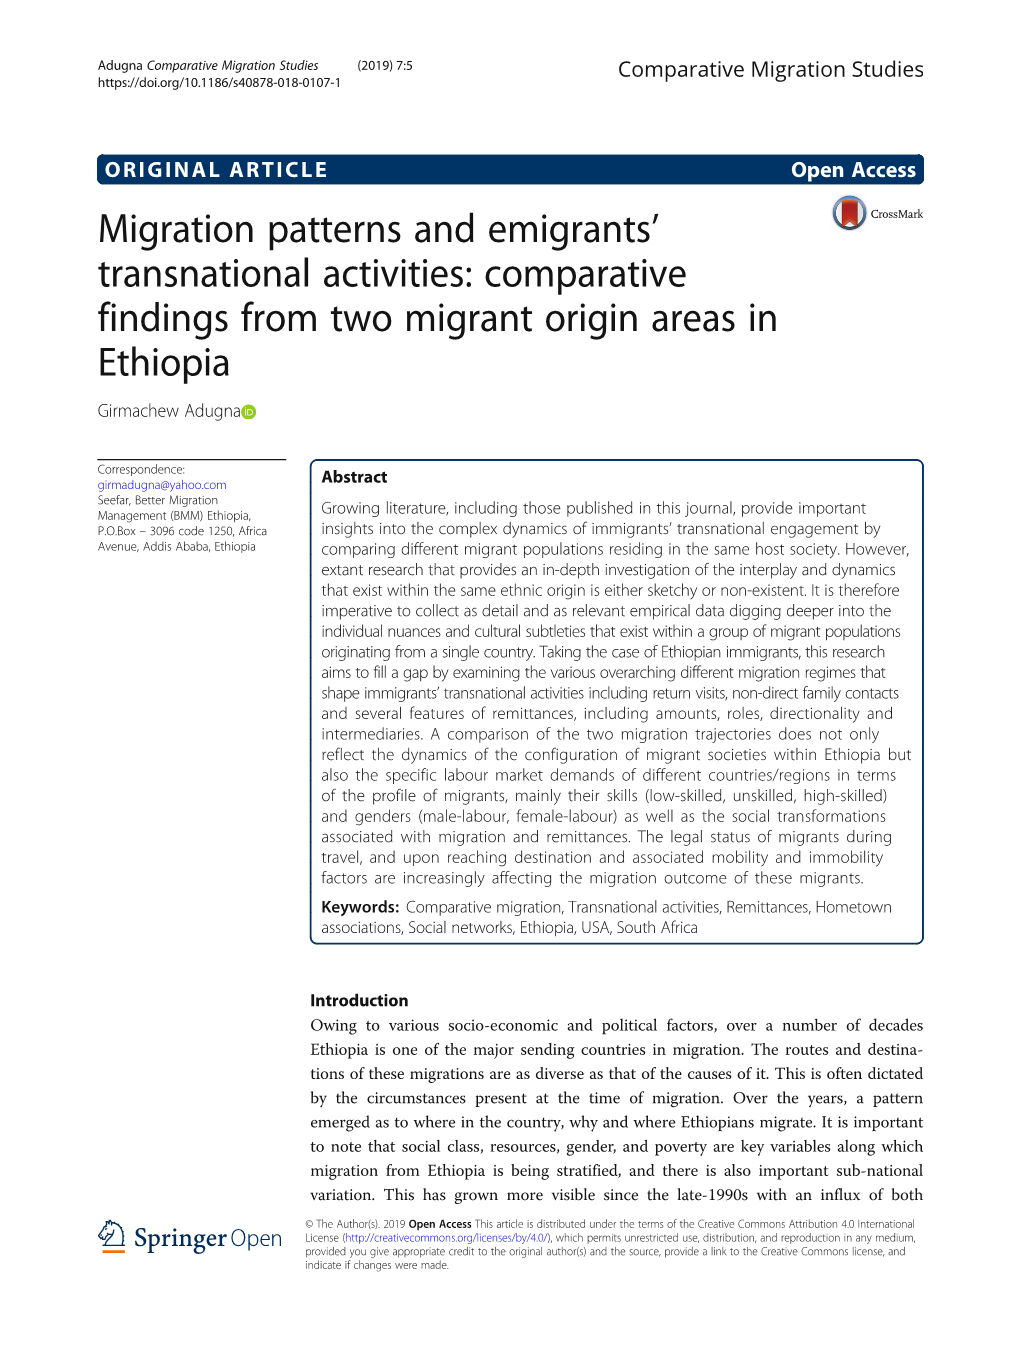 Comparative Findings from Two Migrant Origin Areas in Ethiopia Girmachew Adugna